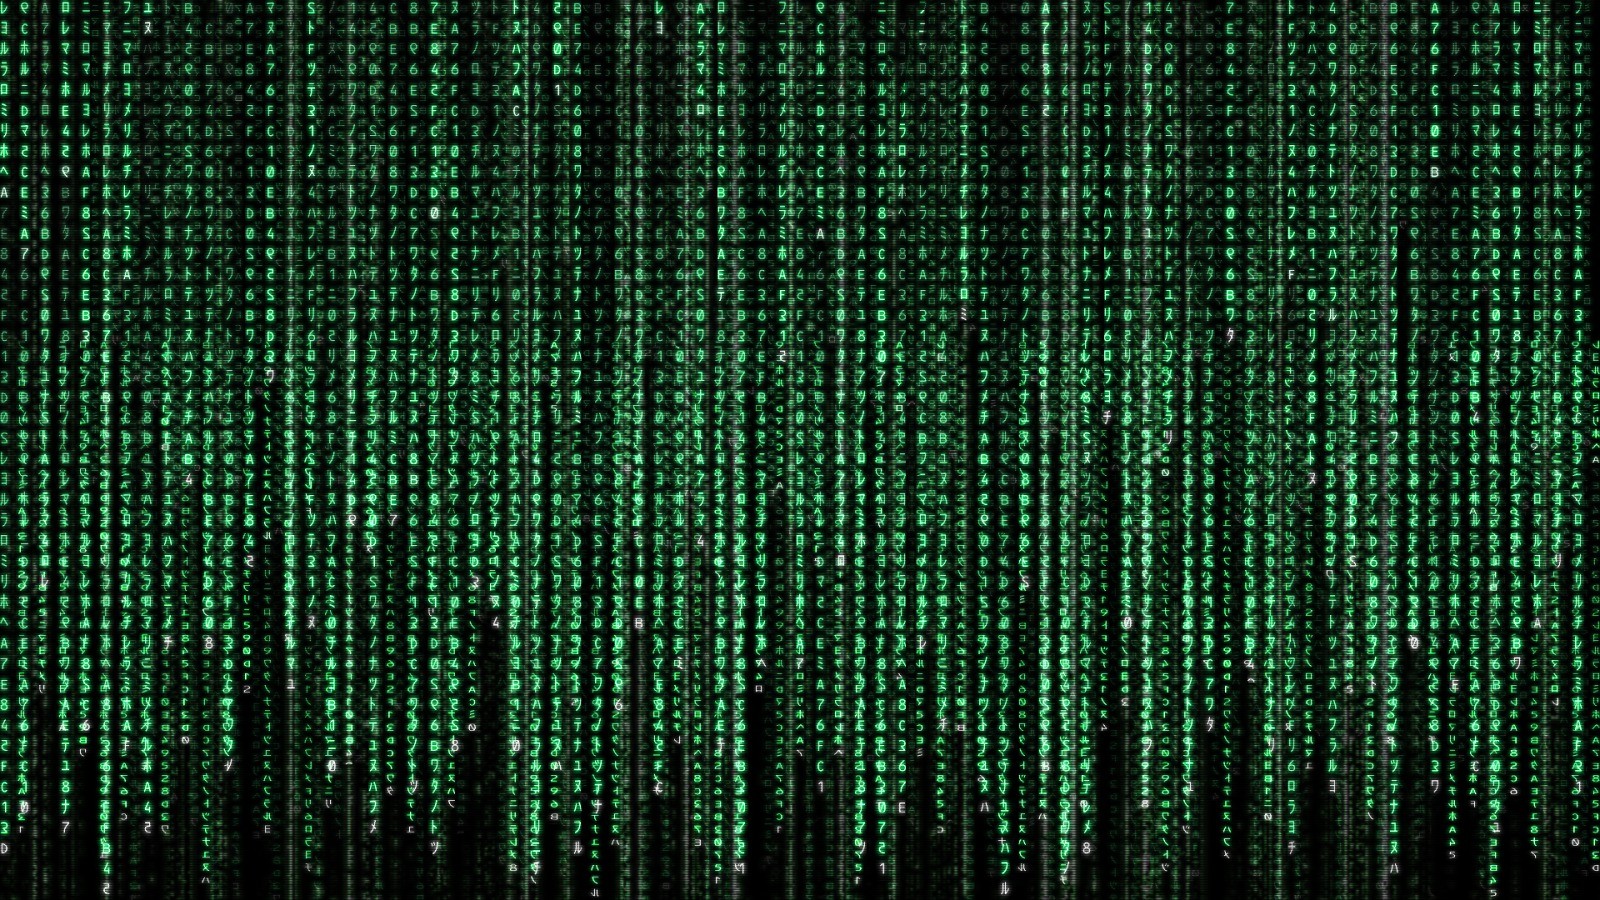 General 1600x900 The Matrix code movies digital art green